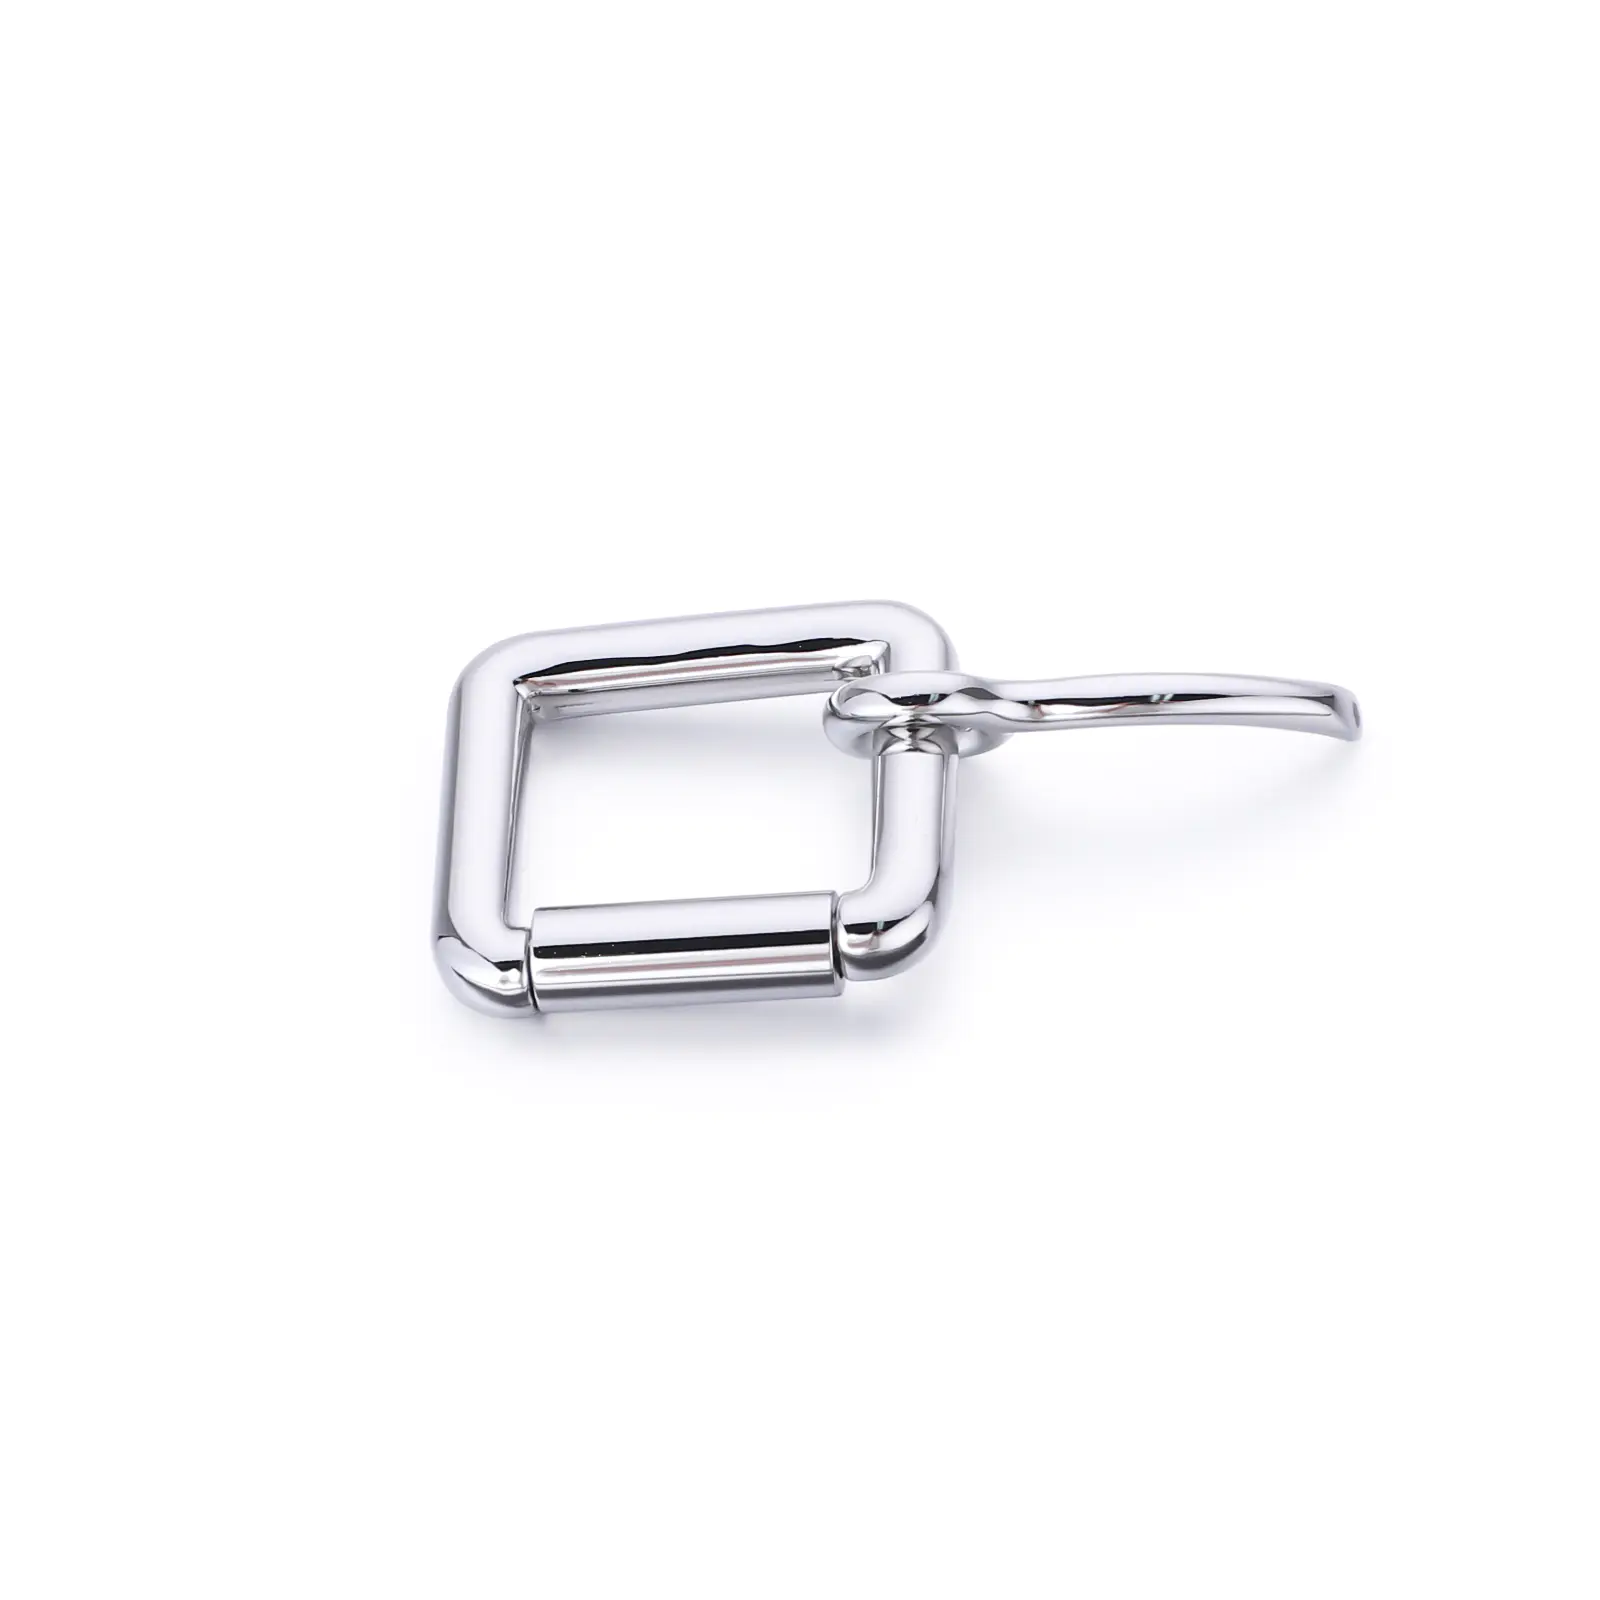 Handbags Parts Buckle Stainless Steel Hook Ring Lock Purse Handle Handbag Stainless Steel Hardware Accessories